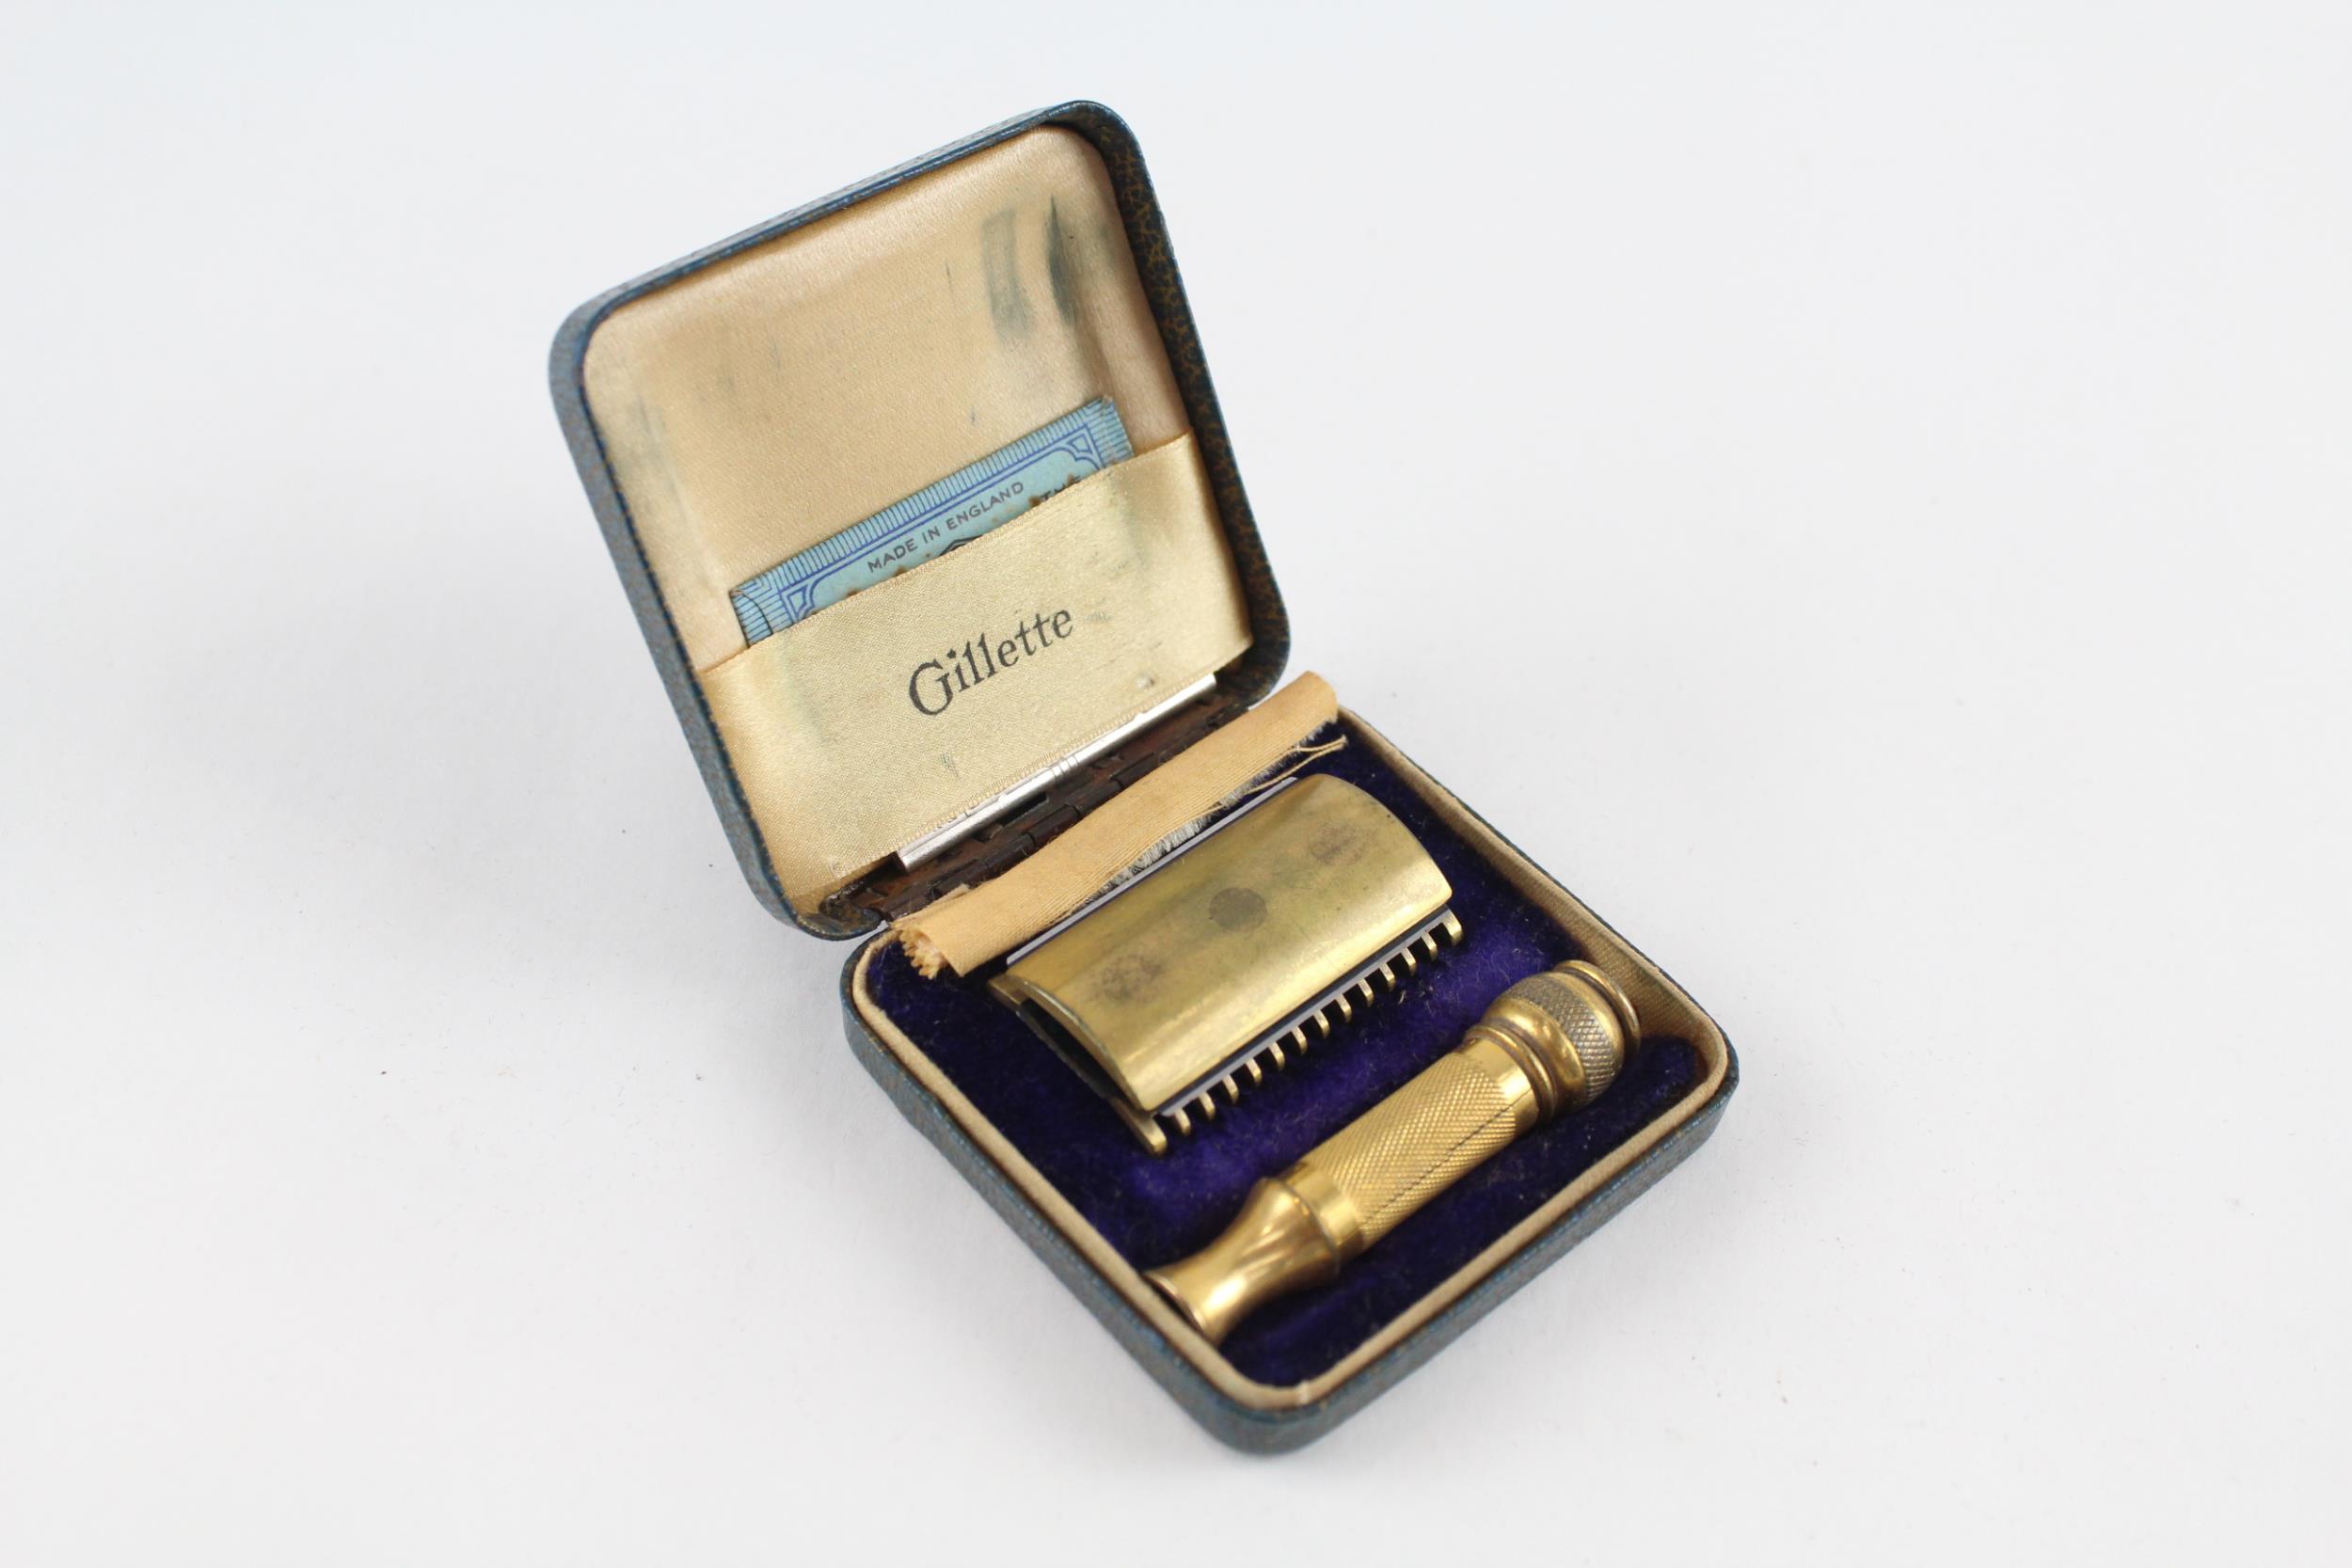 Gillette Vintage Travel Safety Razor Gold Tone in Original Case // Items in vintage condition